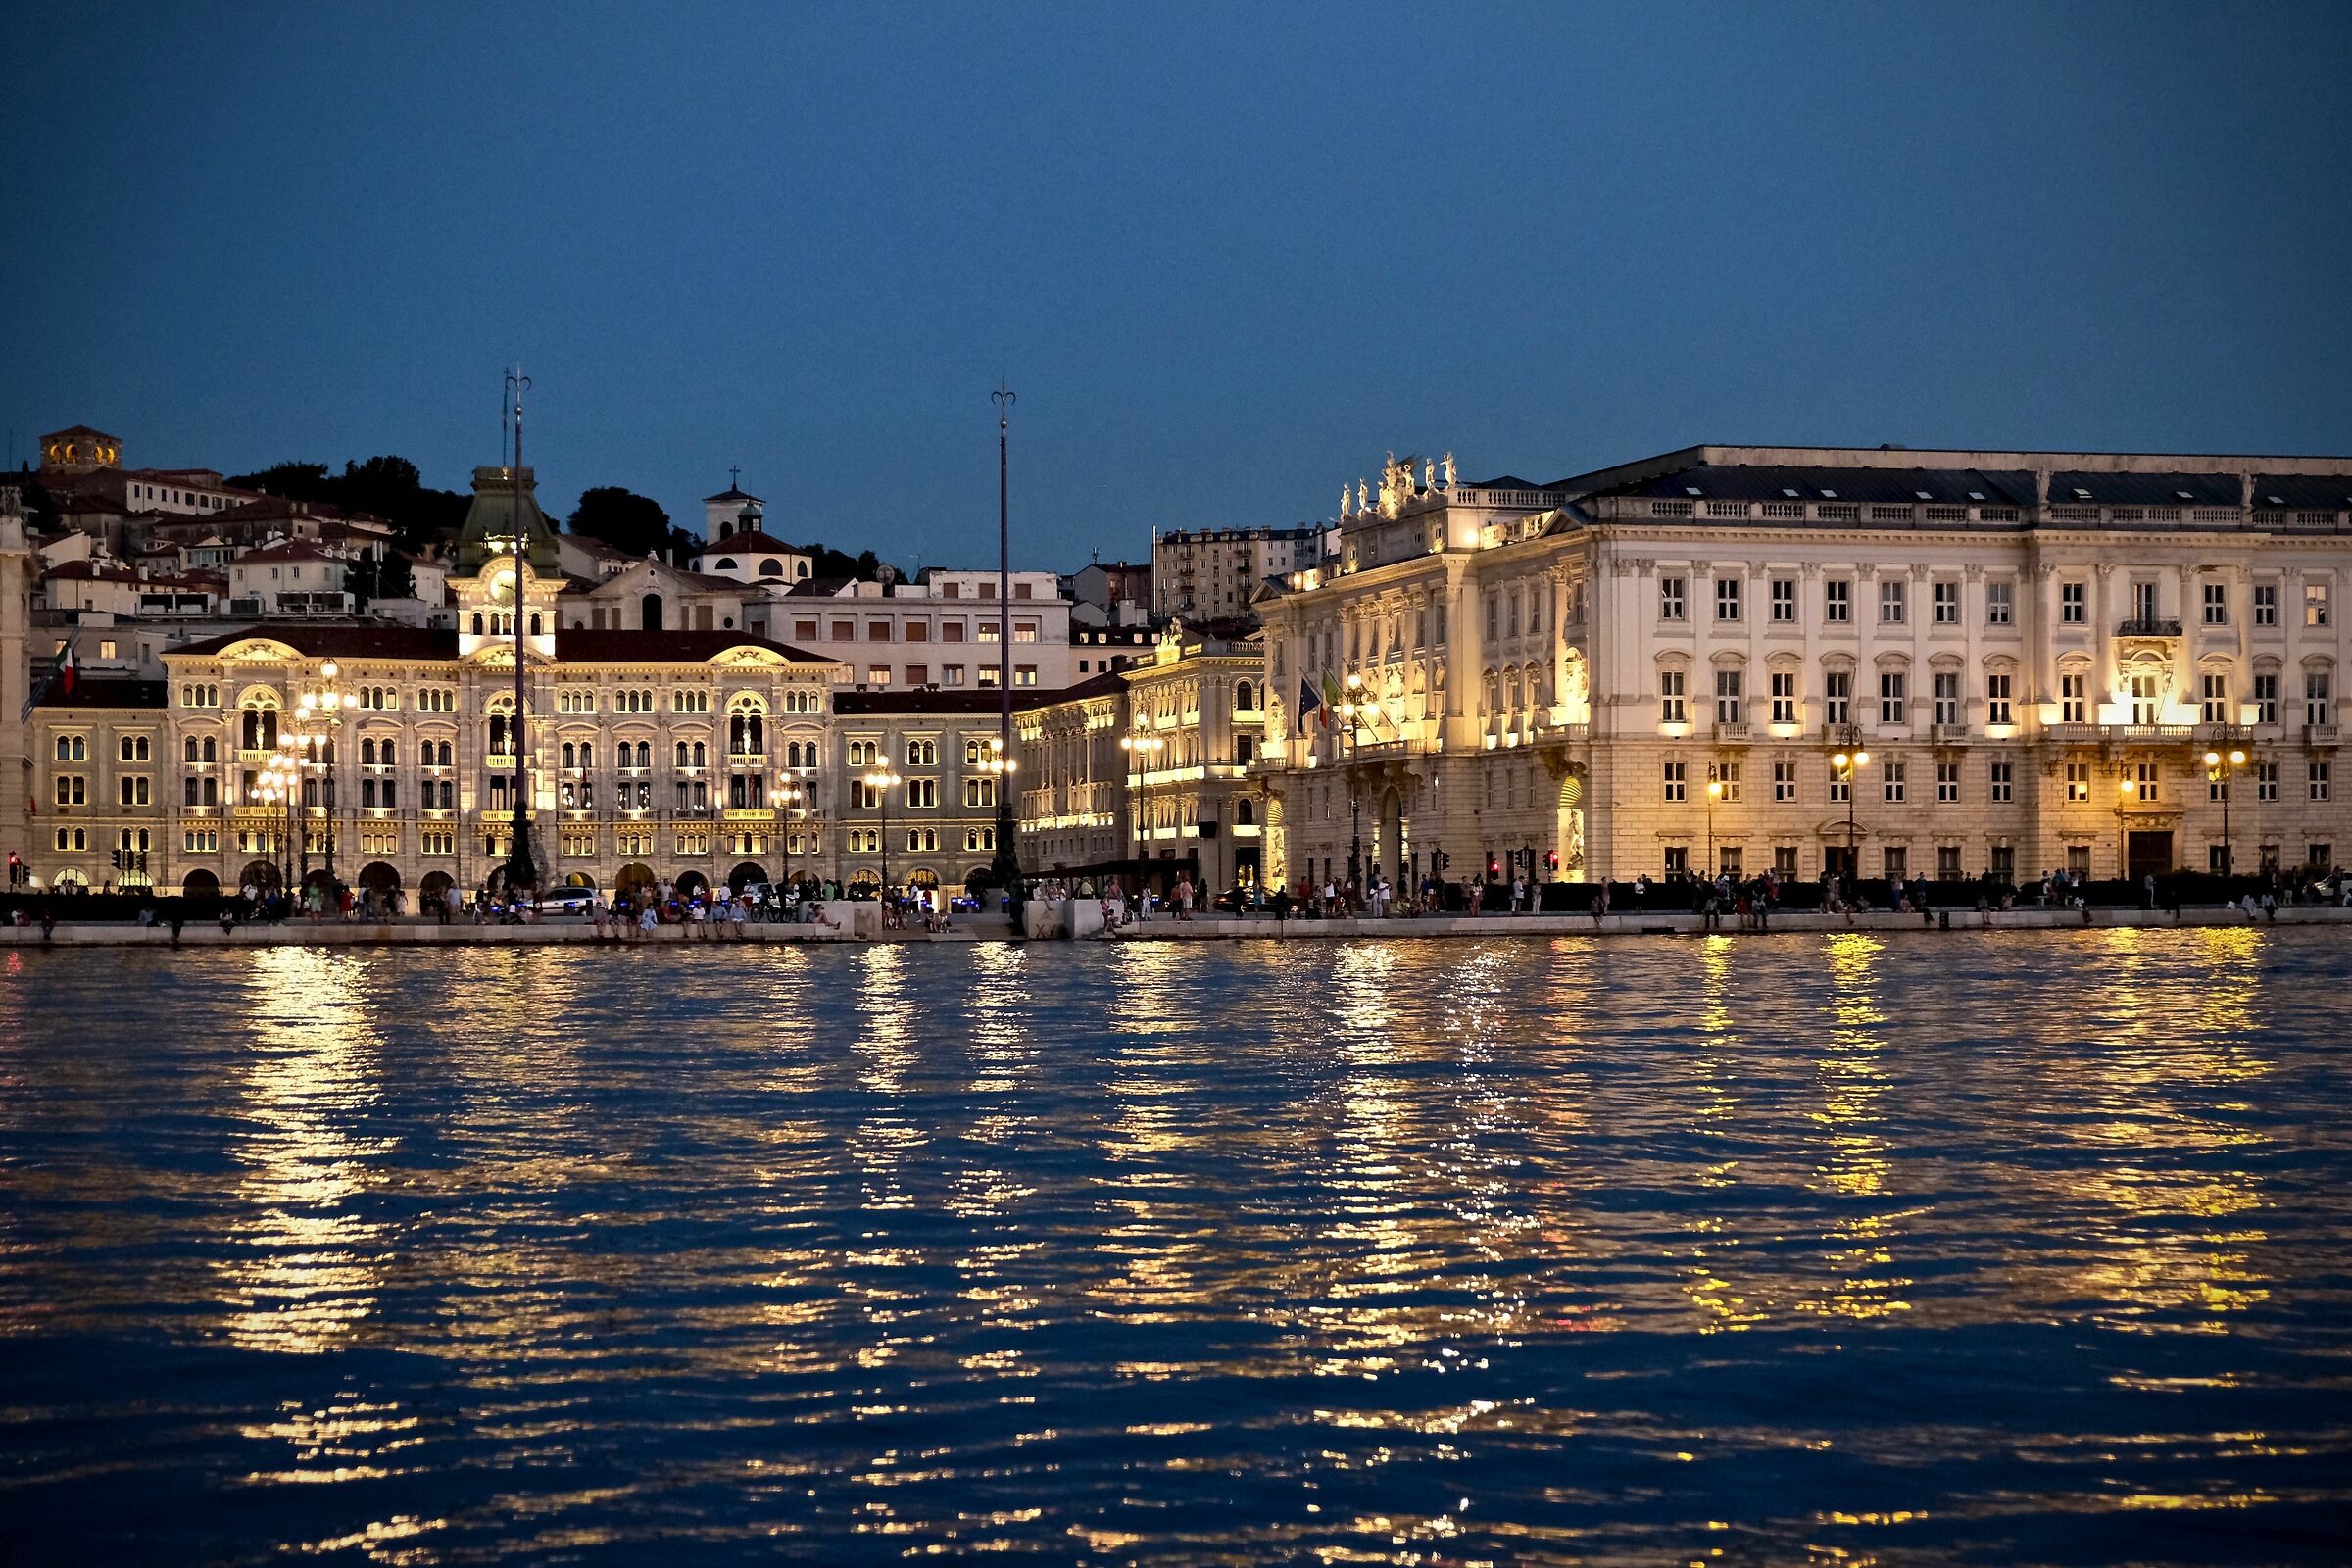 Trieste at night...